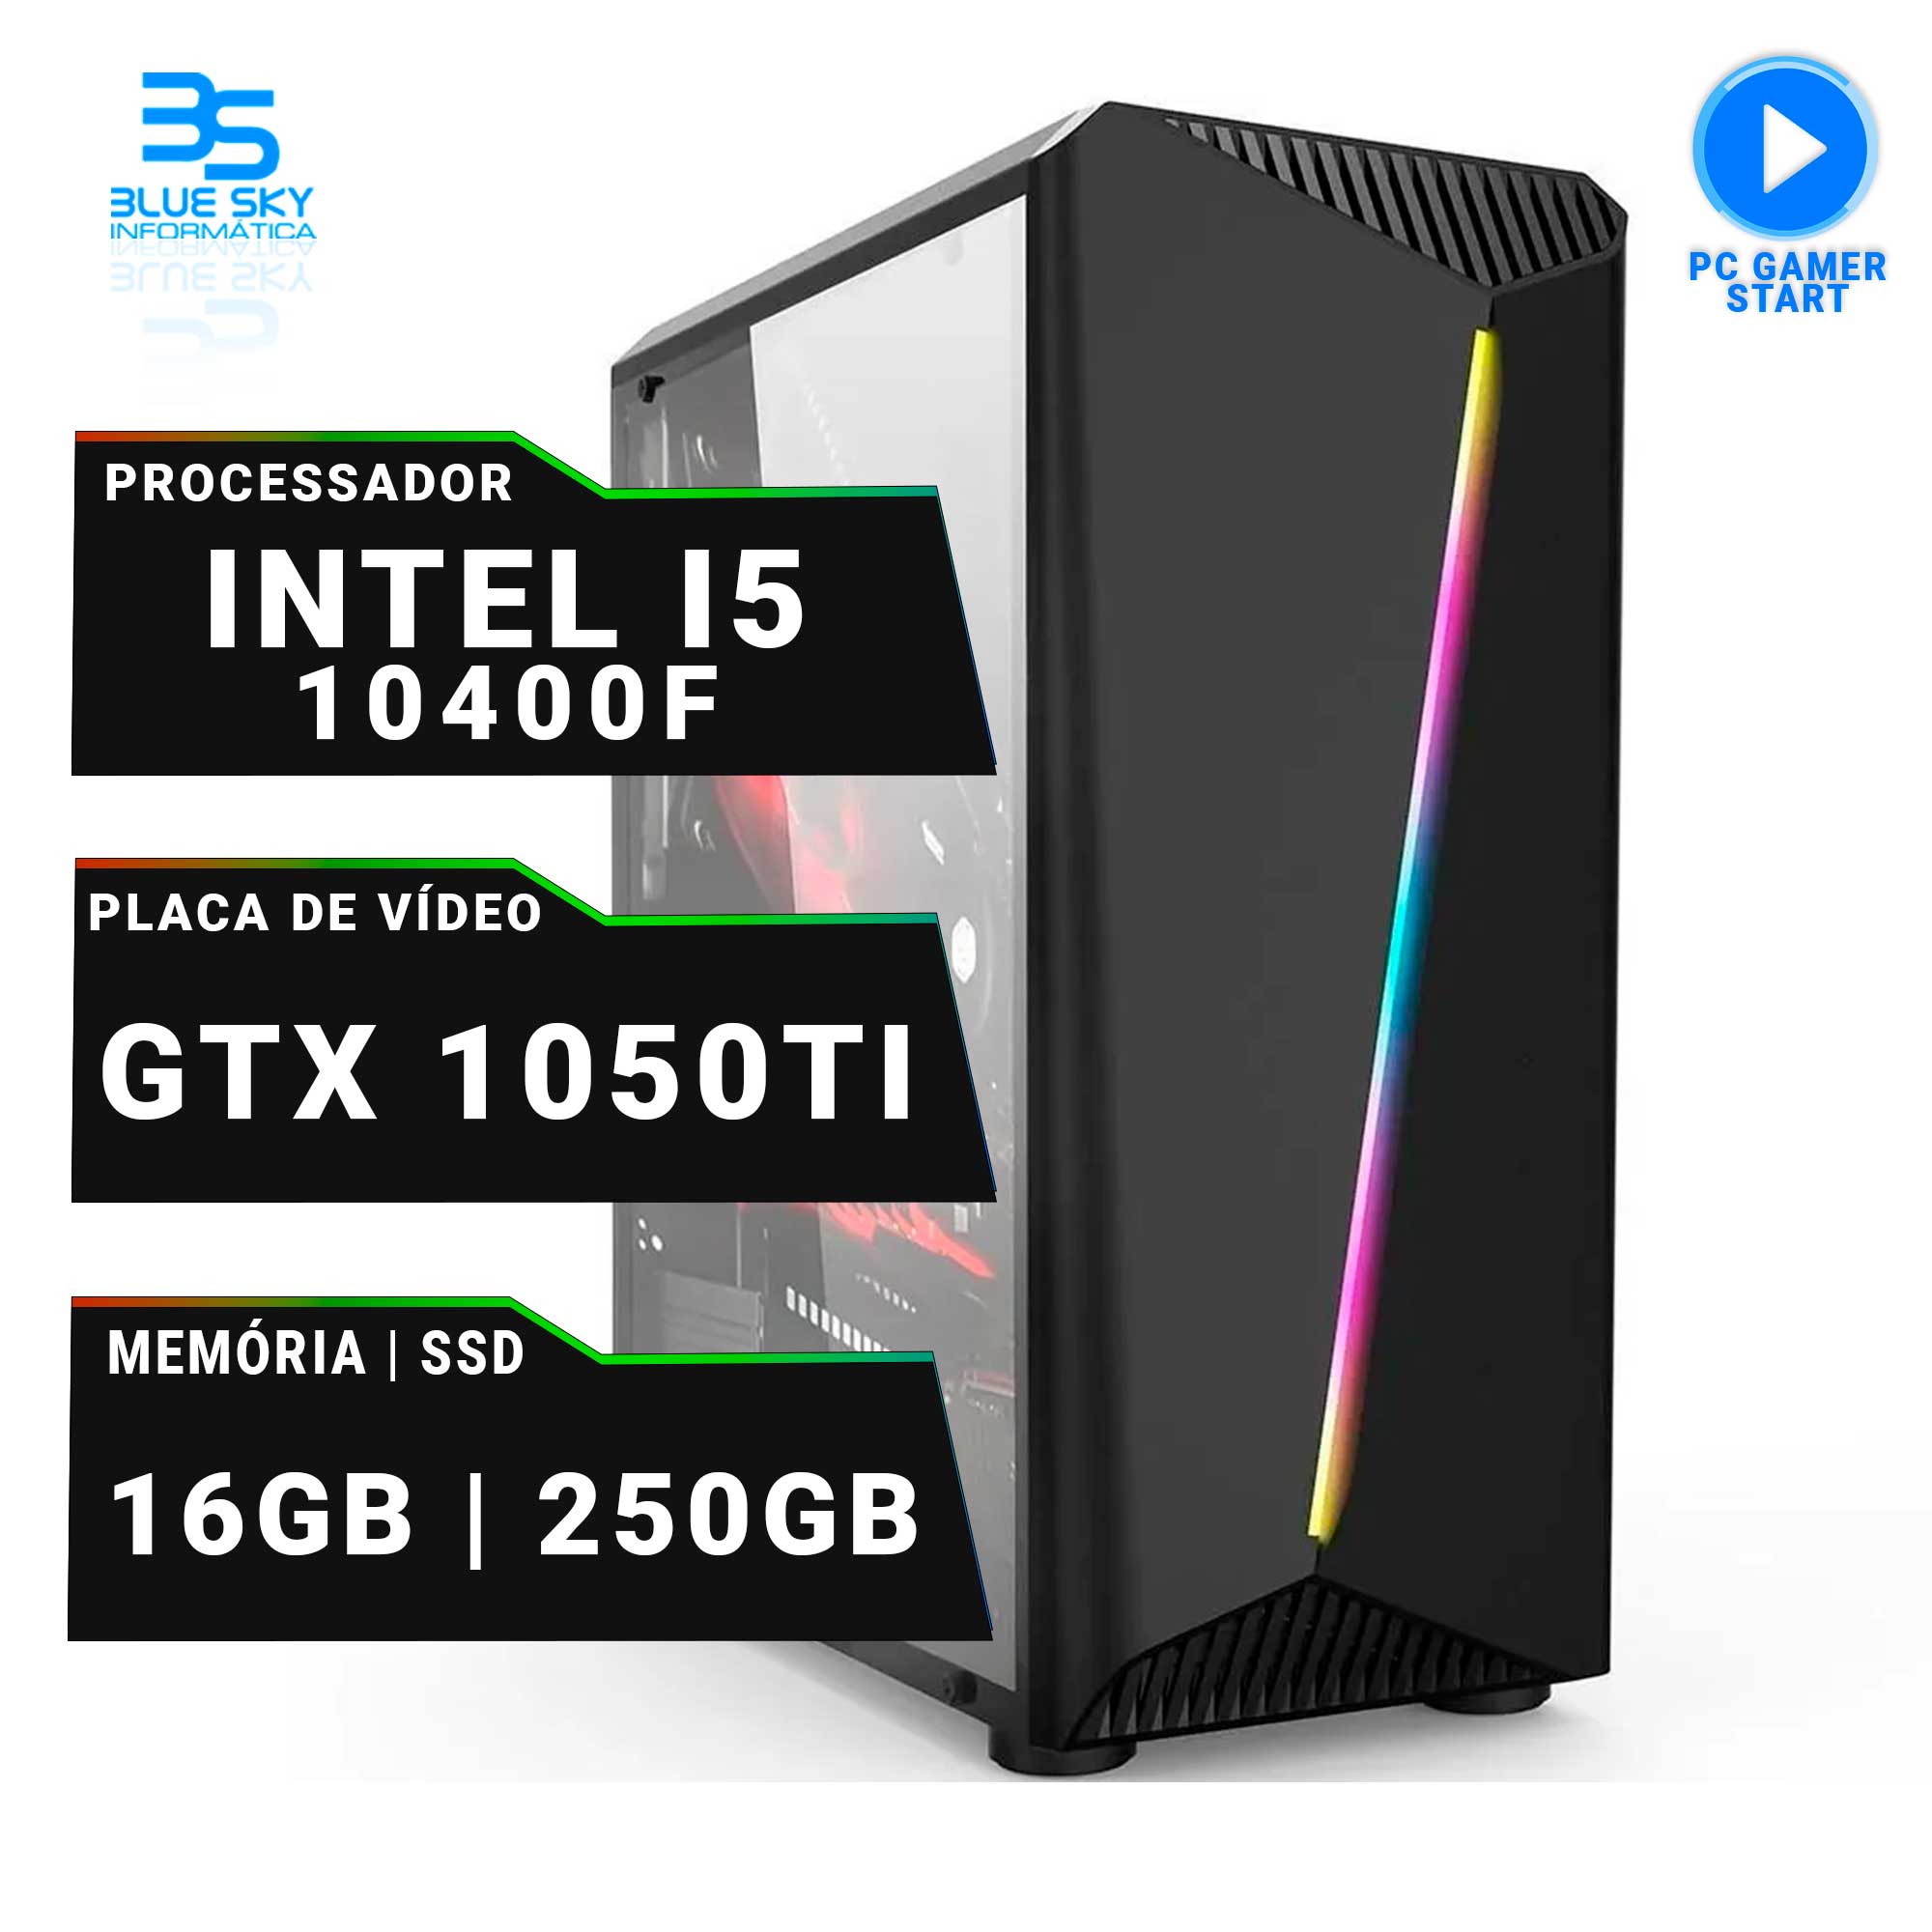 Computador Gamer Intel I5 10400f, 16GB DDR4, SSD 240GB, 500W, GTX 1050ti 4GB